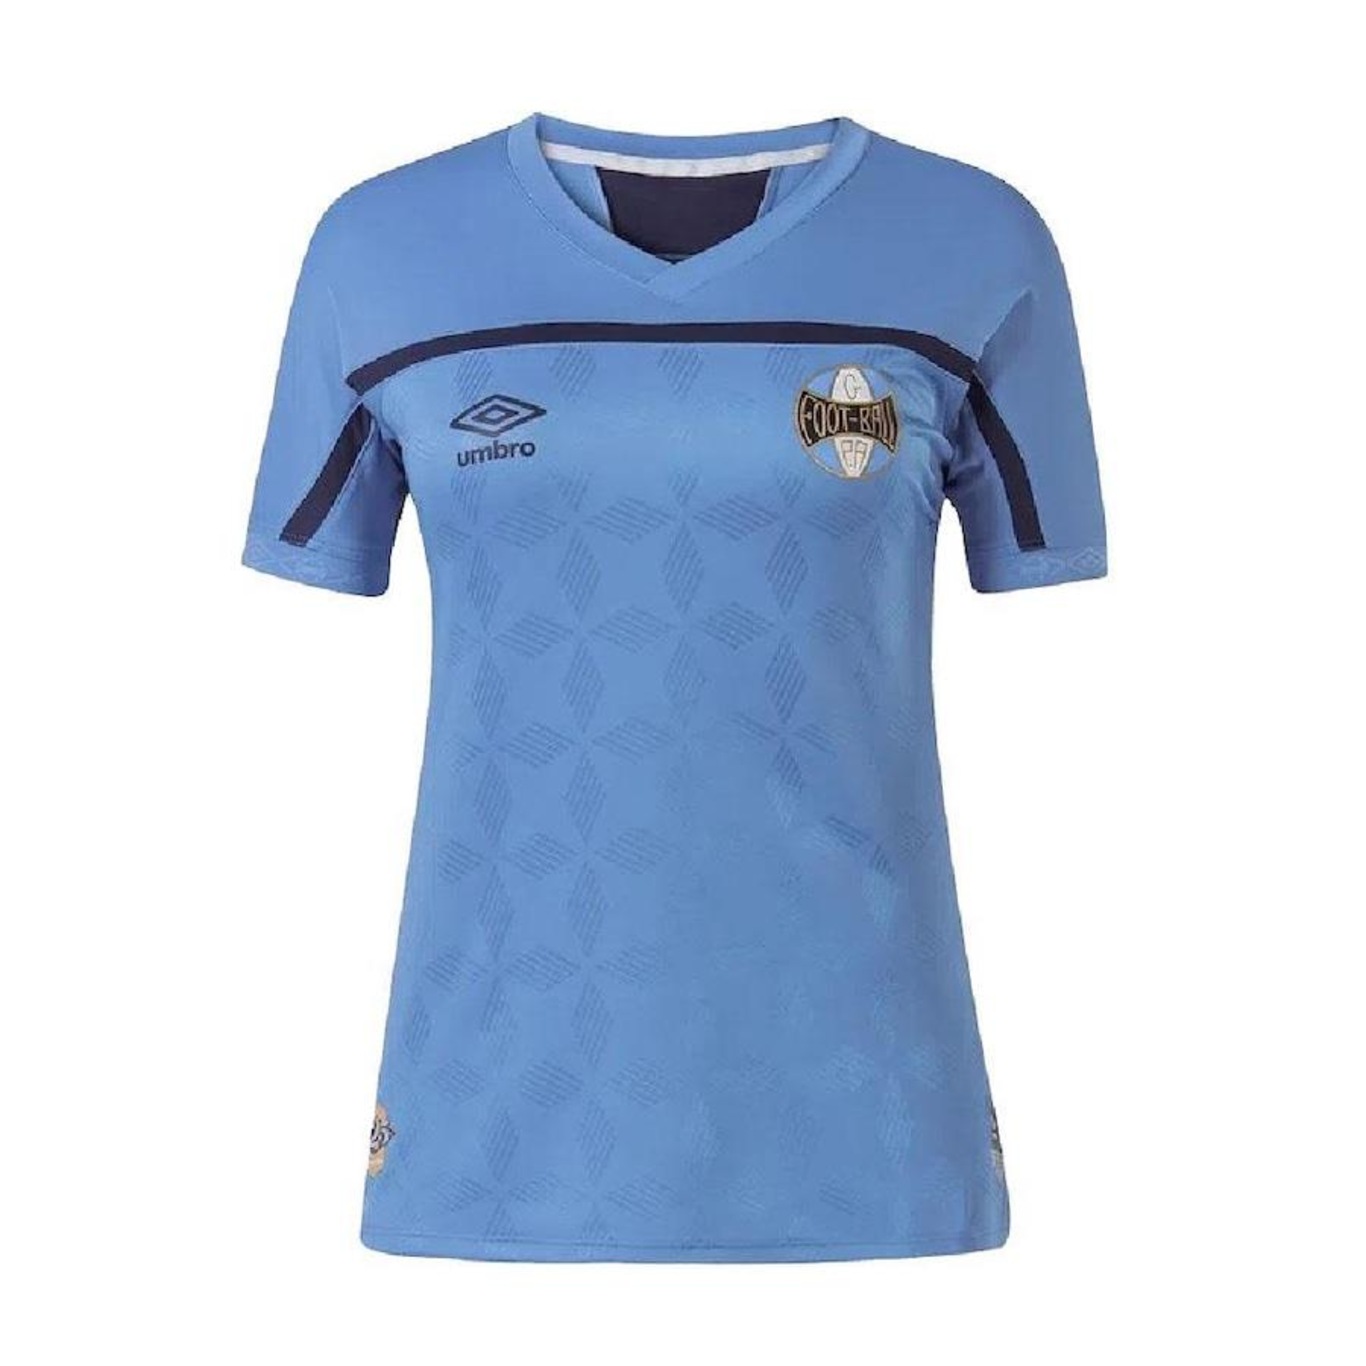 Camisa do Grêmio III 2020 Umbro - Feminina - Foto 1